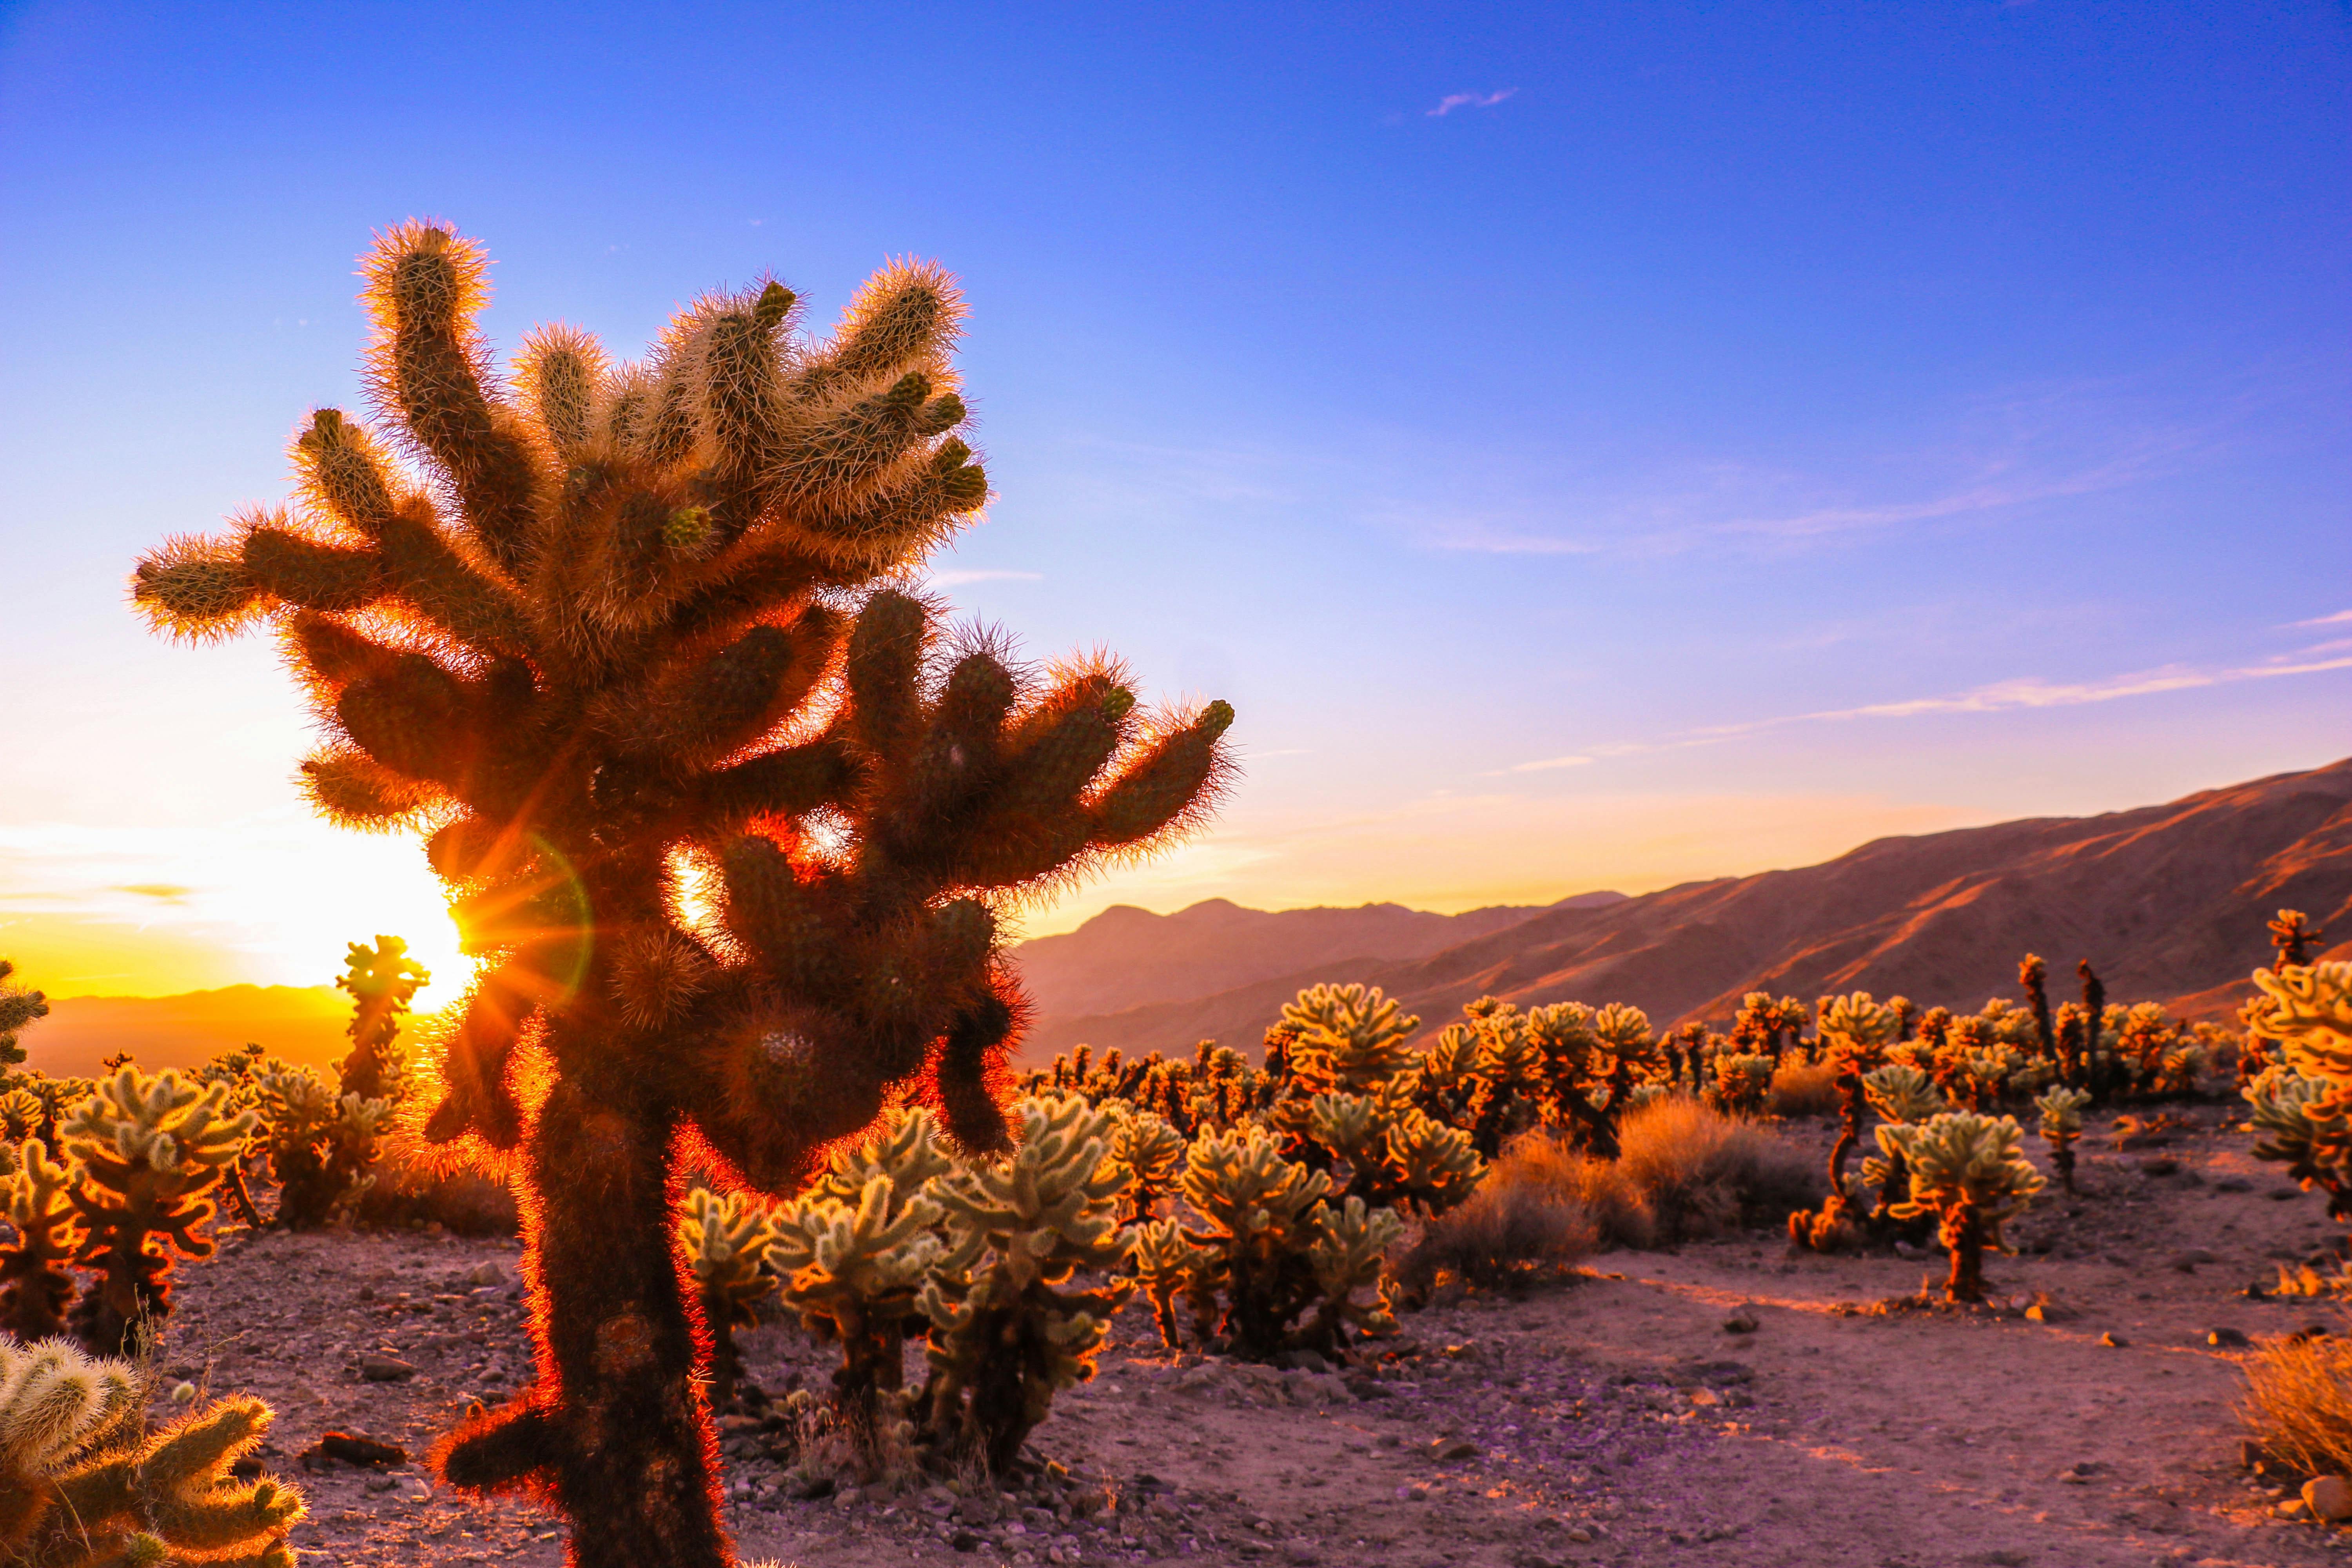 A dramatic sunrise over the desert landscape